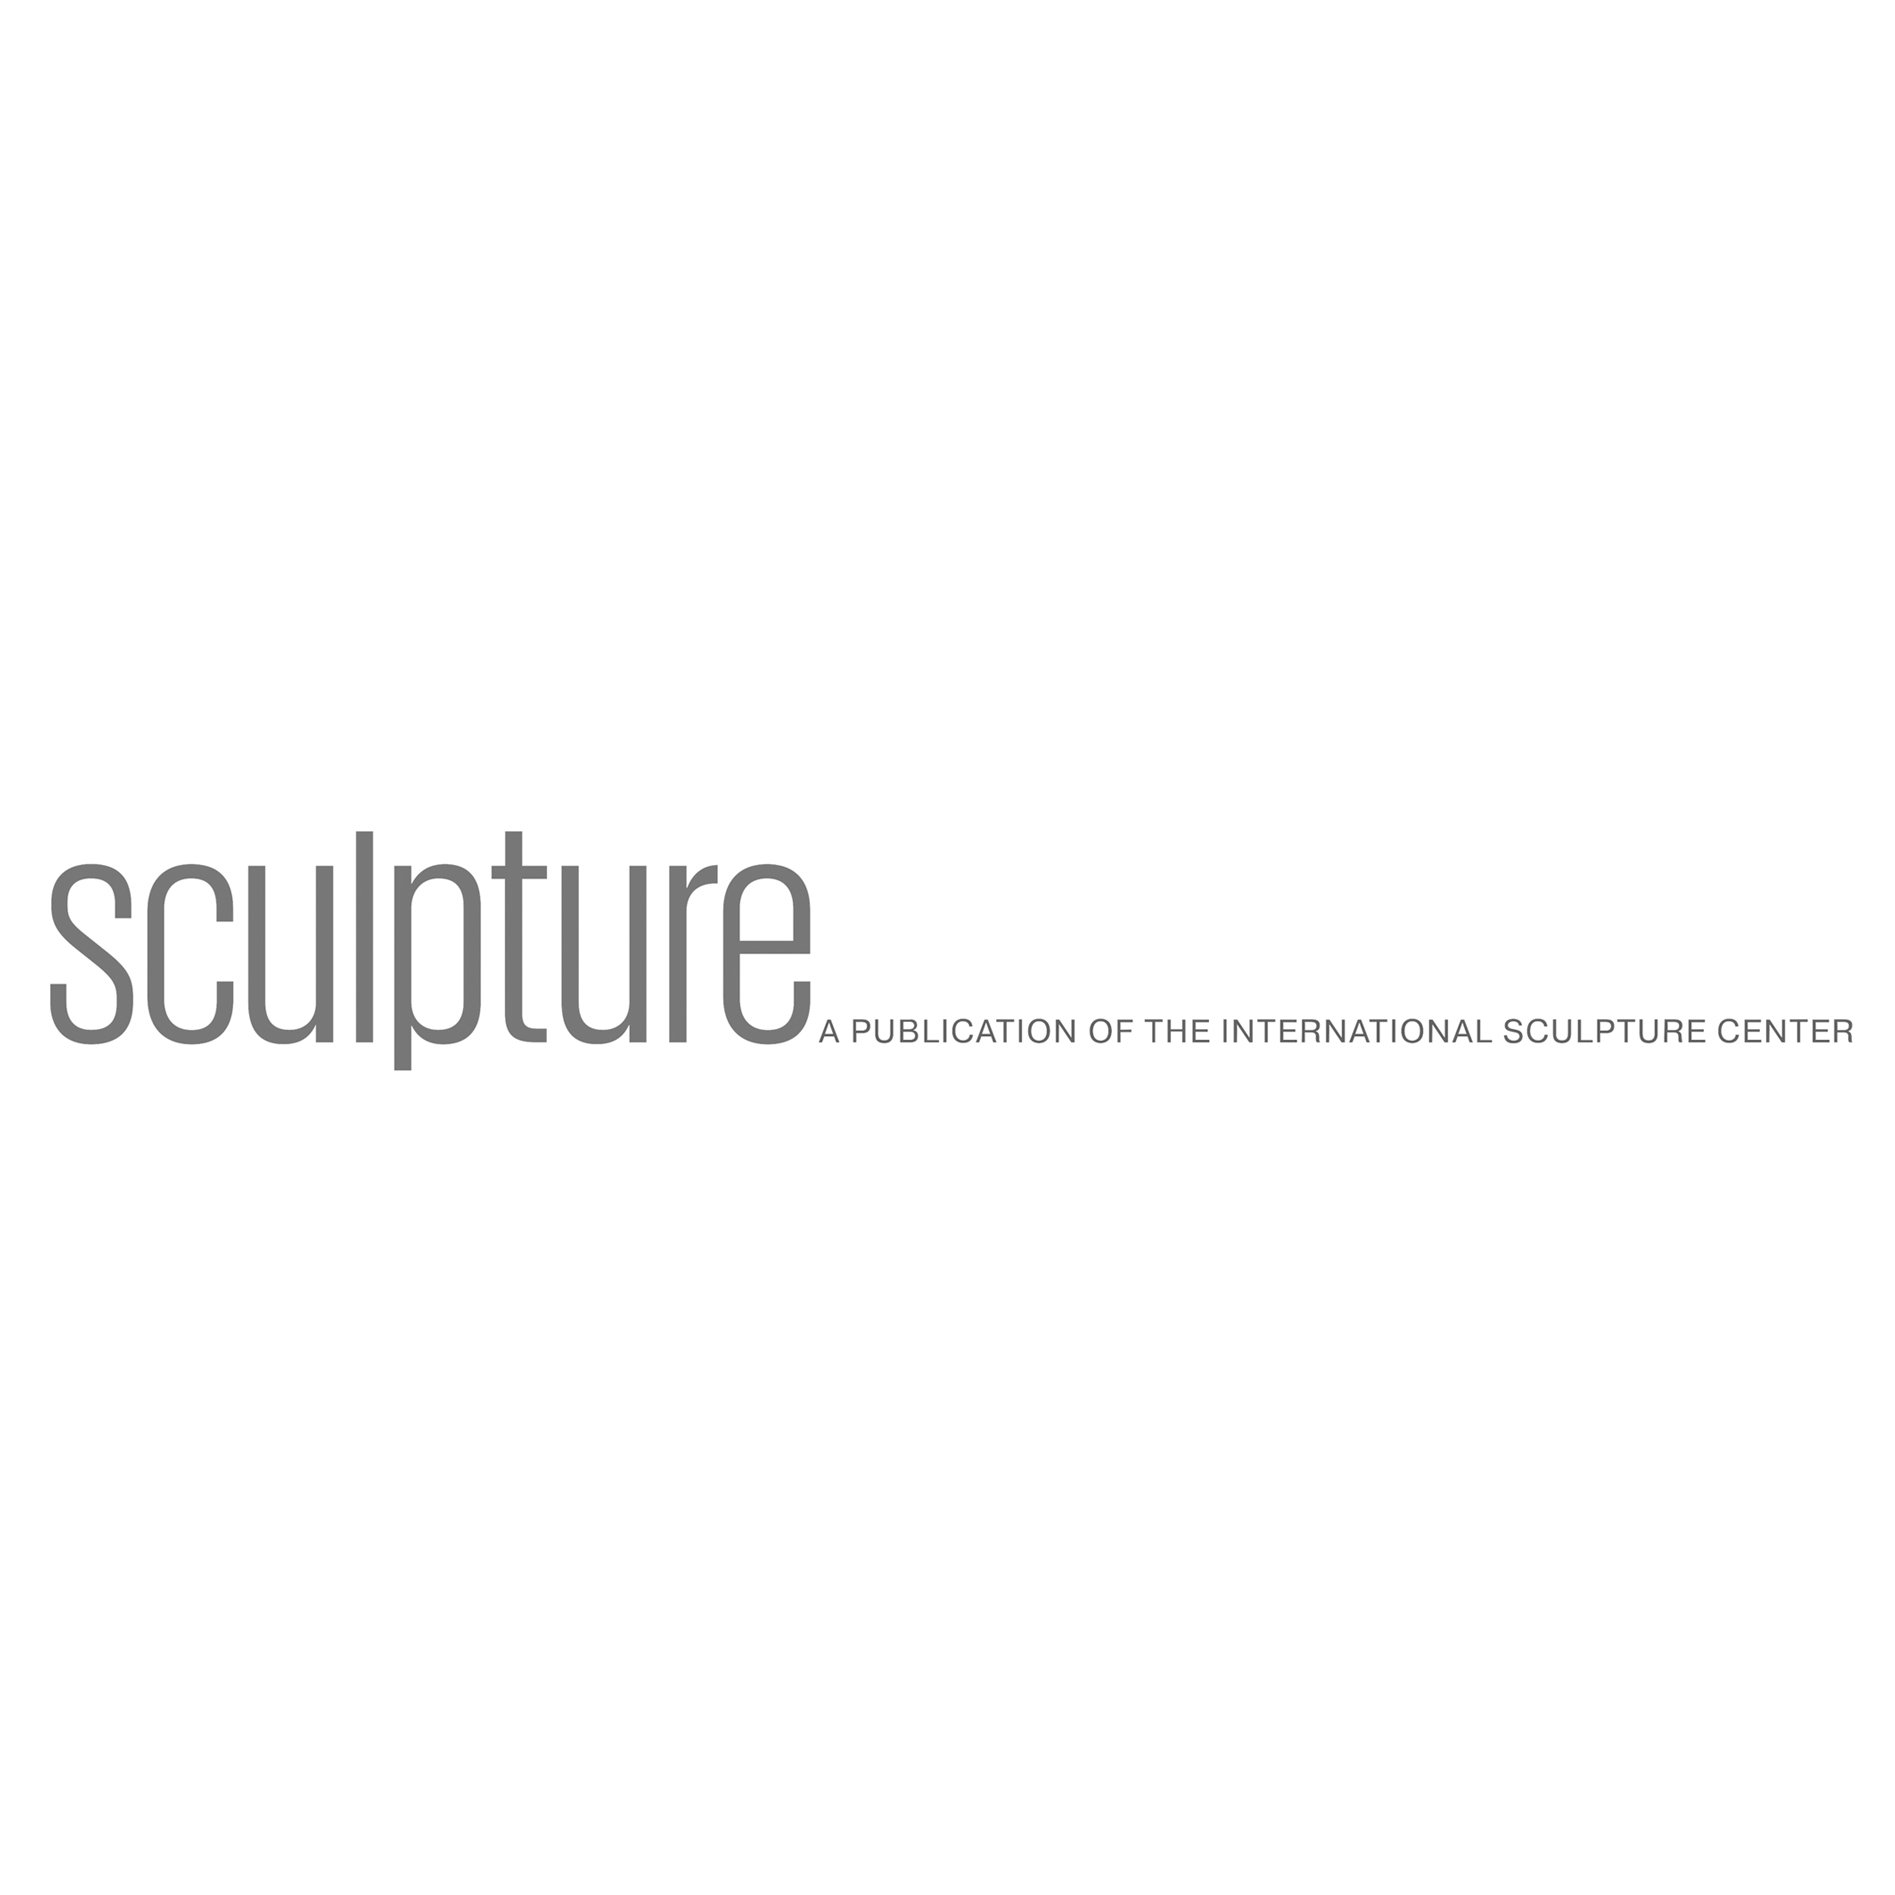 sculptureMAG-logo-tag copy 2.jpg